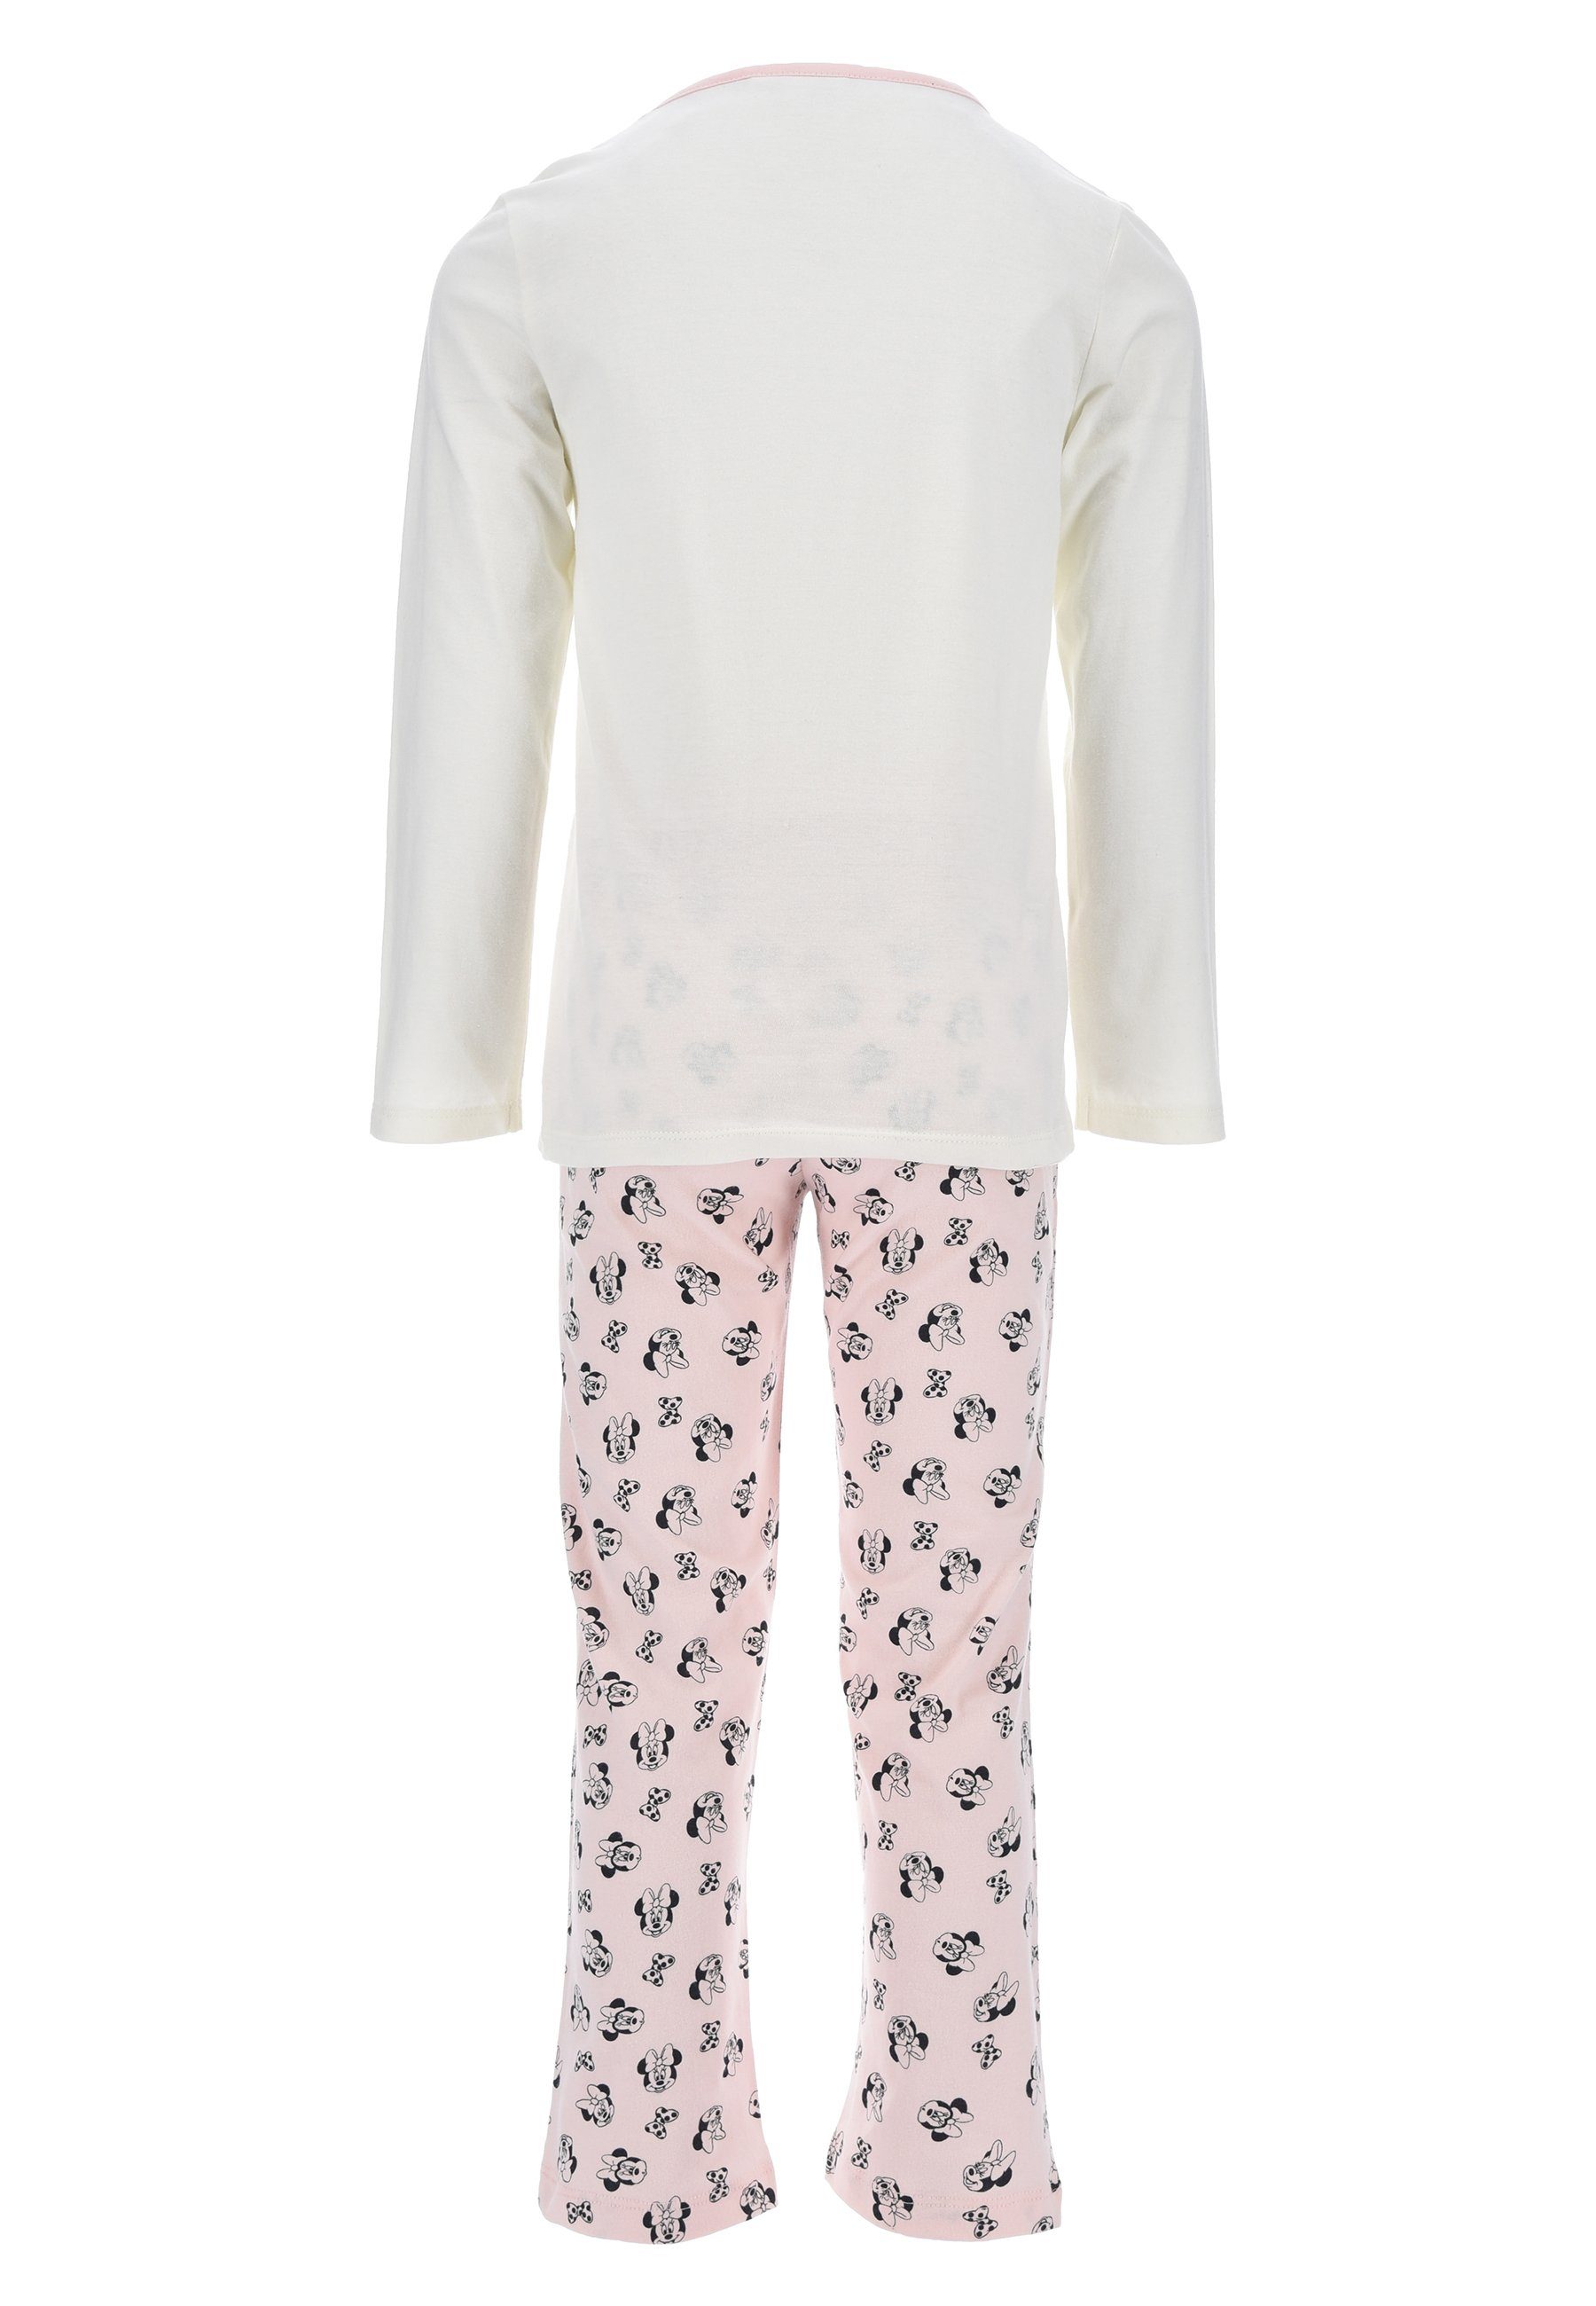 Disney Minnie (2 tlg) Pyjama Shirt Schlafanzug Mädchen Schlaf-Hose Mini Weiß + Schlafanzug Maus Langarm Mouse